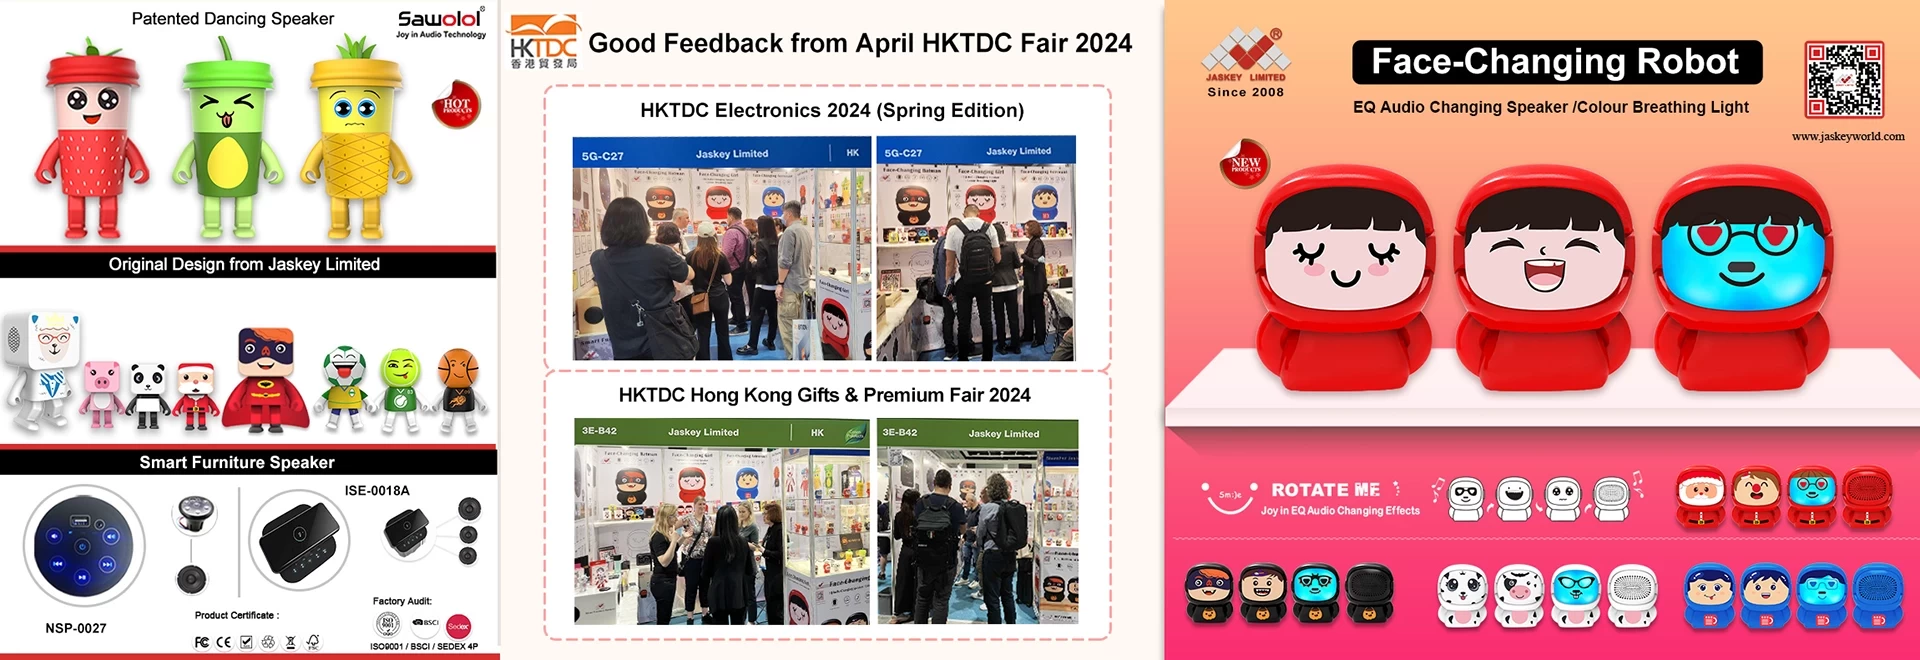 Bom feedback da HKTDC Electronics 2024 (Spring Edition) e Gifts & Premium Fair